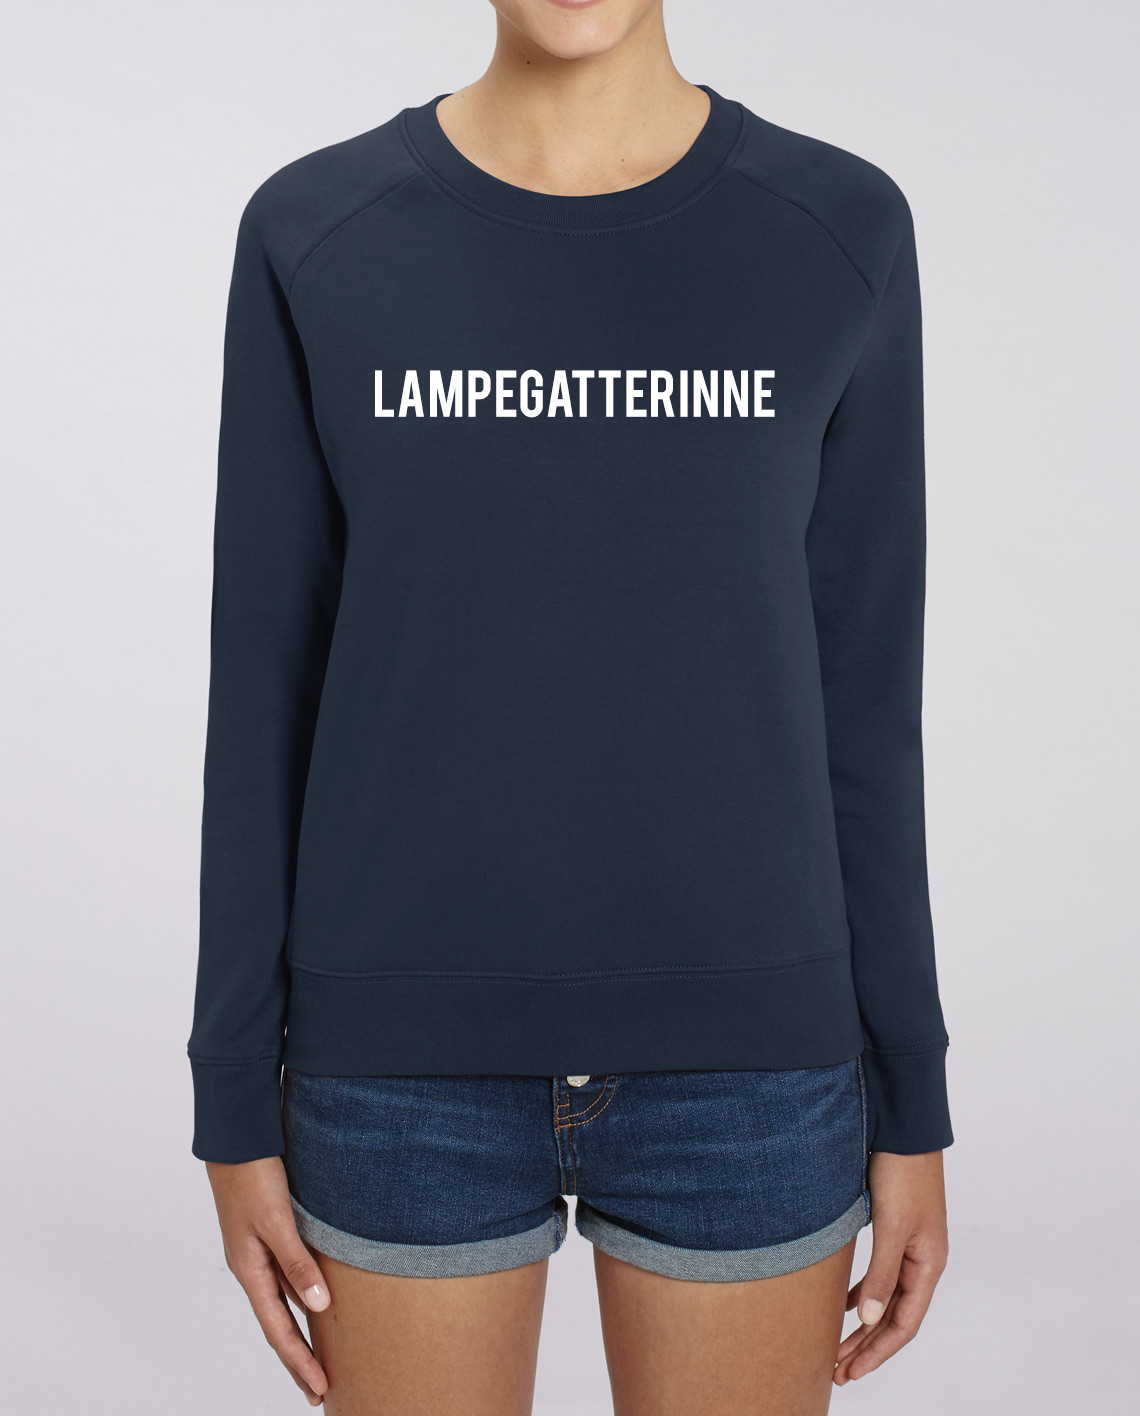 Sweater Lampegatterinne